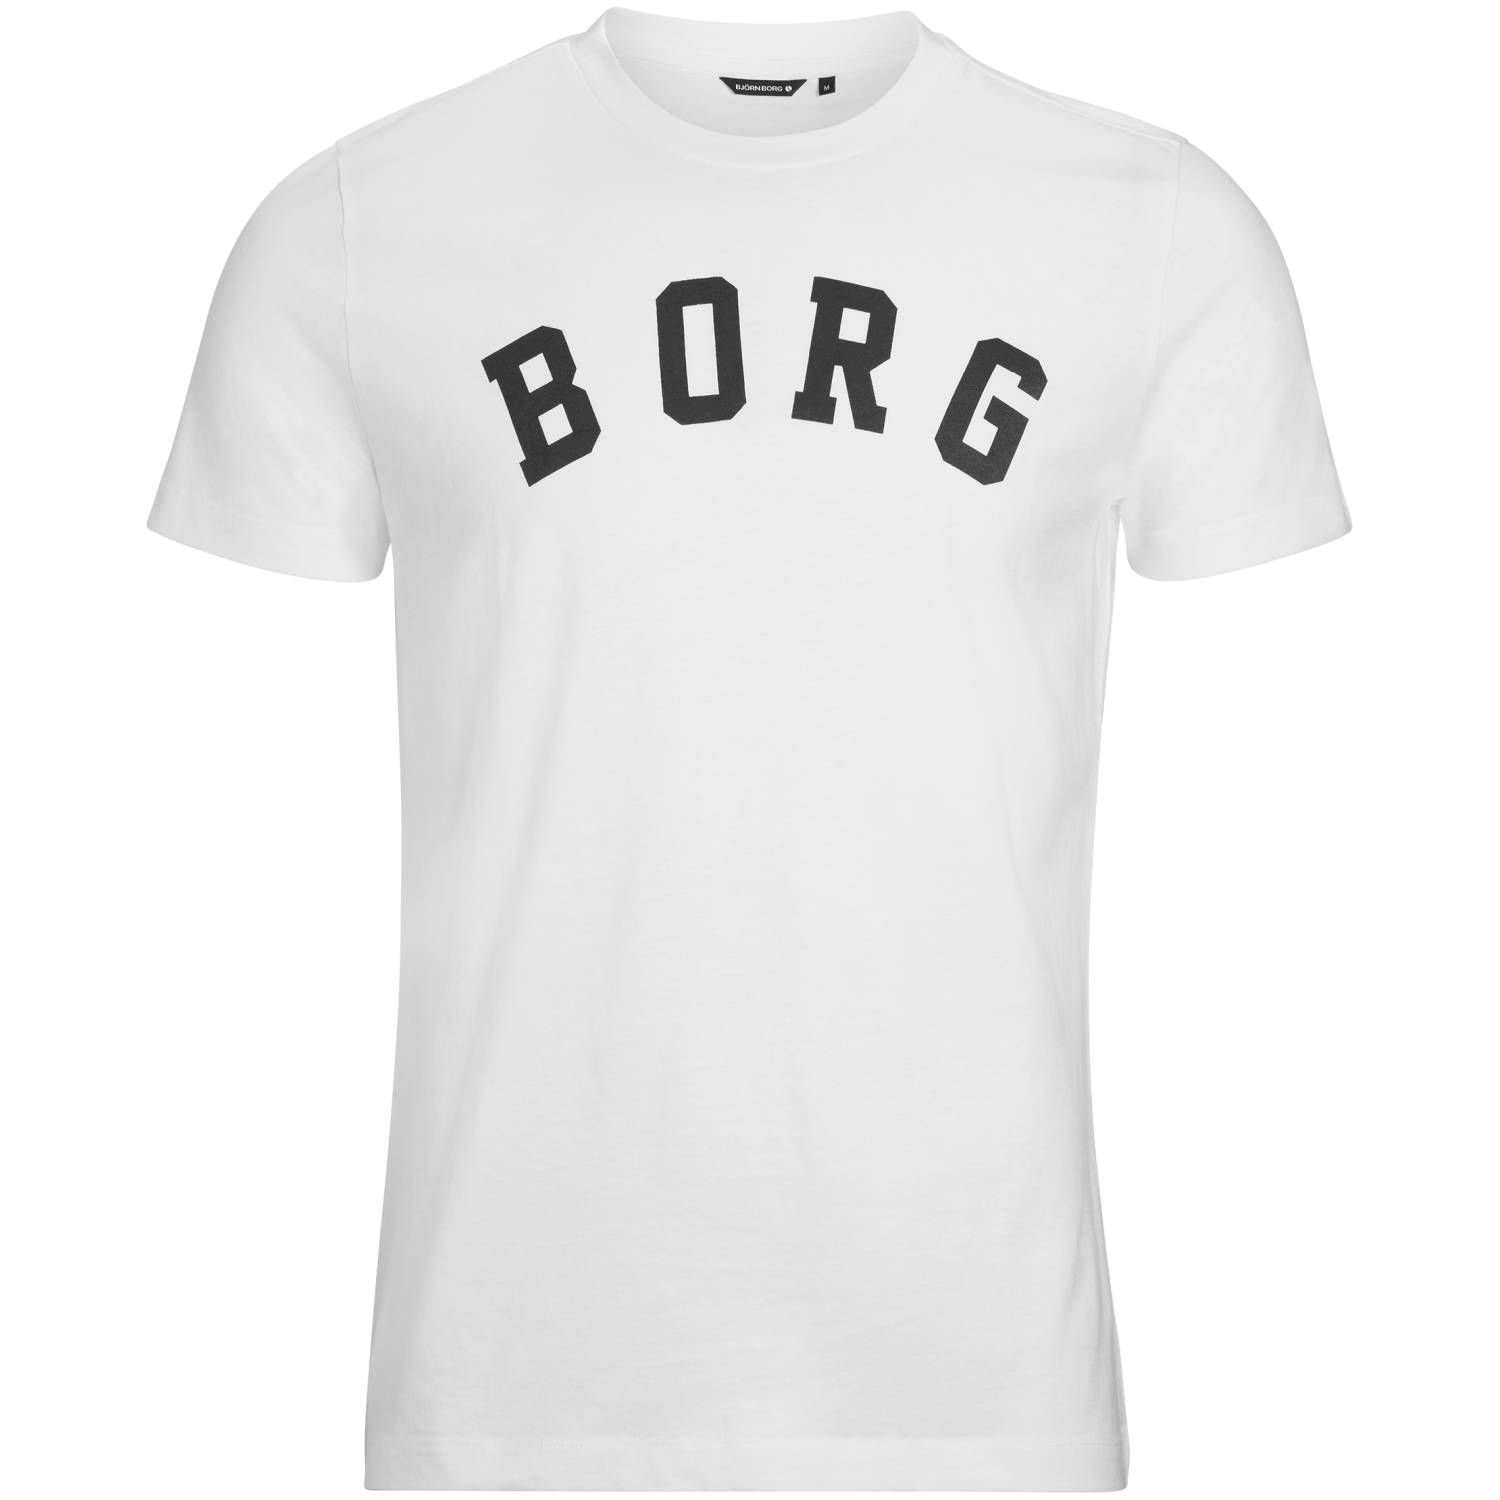 Björn Borg Berny Tee